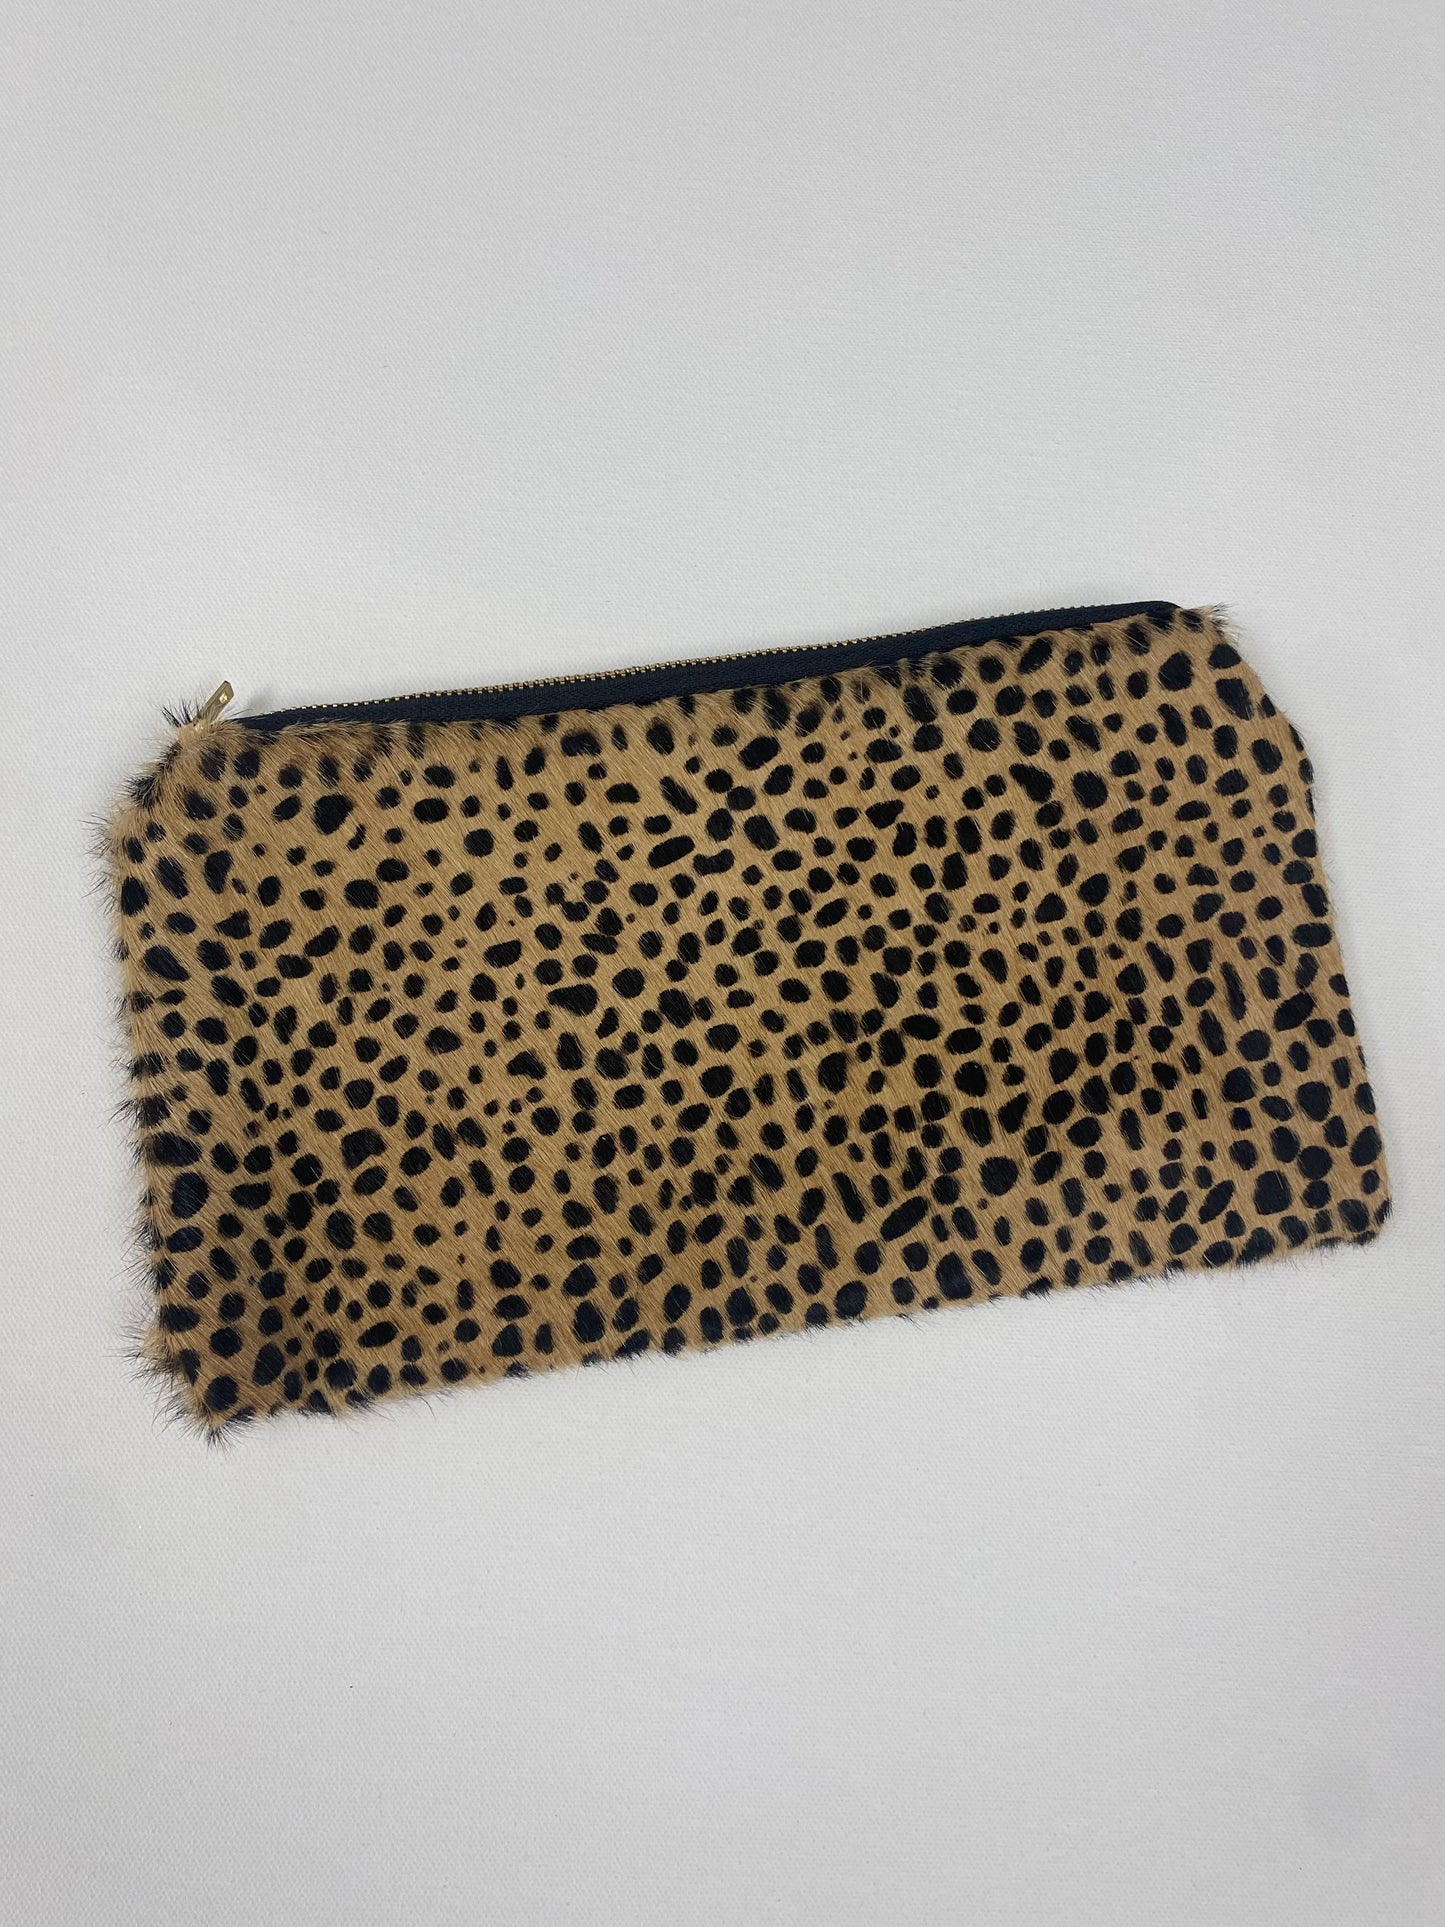 Hair-on Small Cheetah Print Leather Clutch